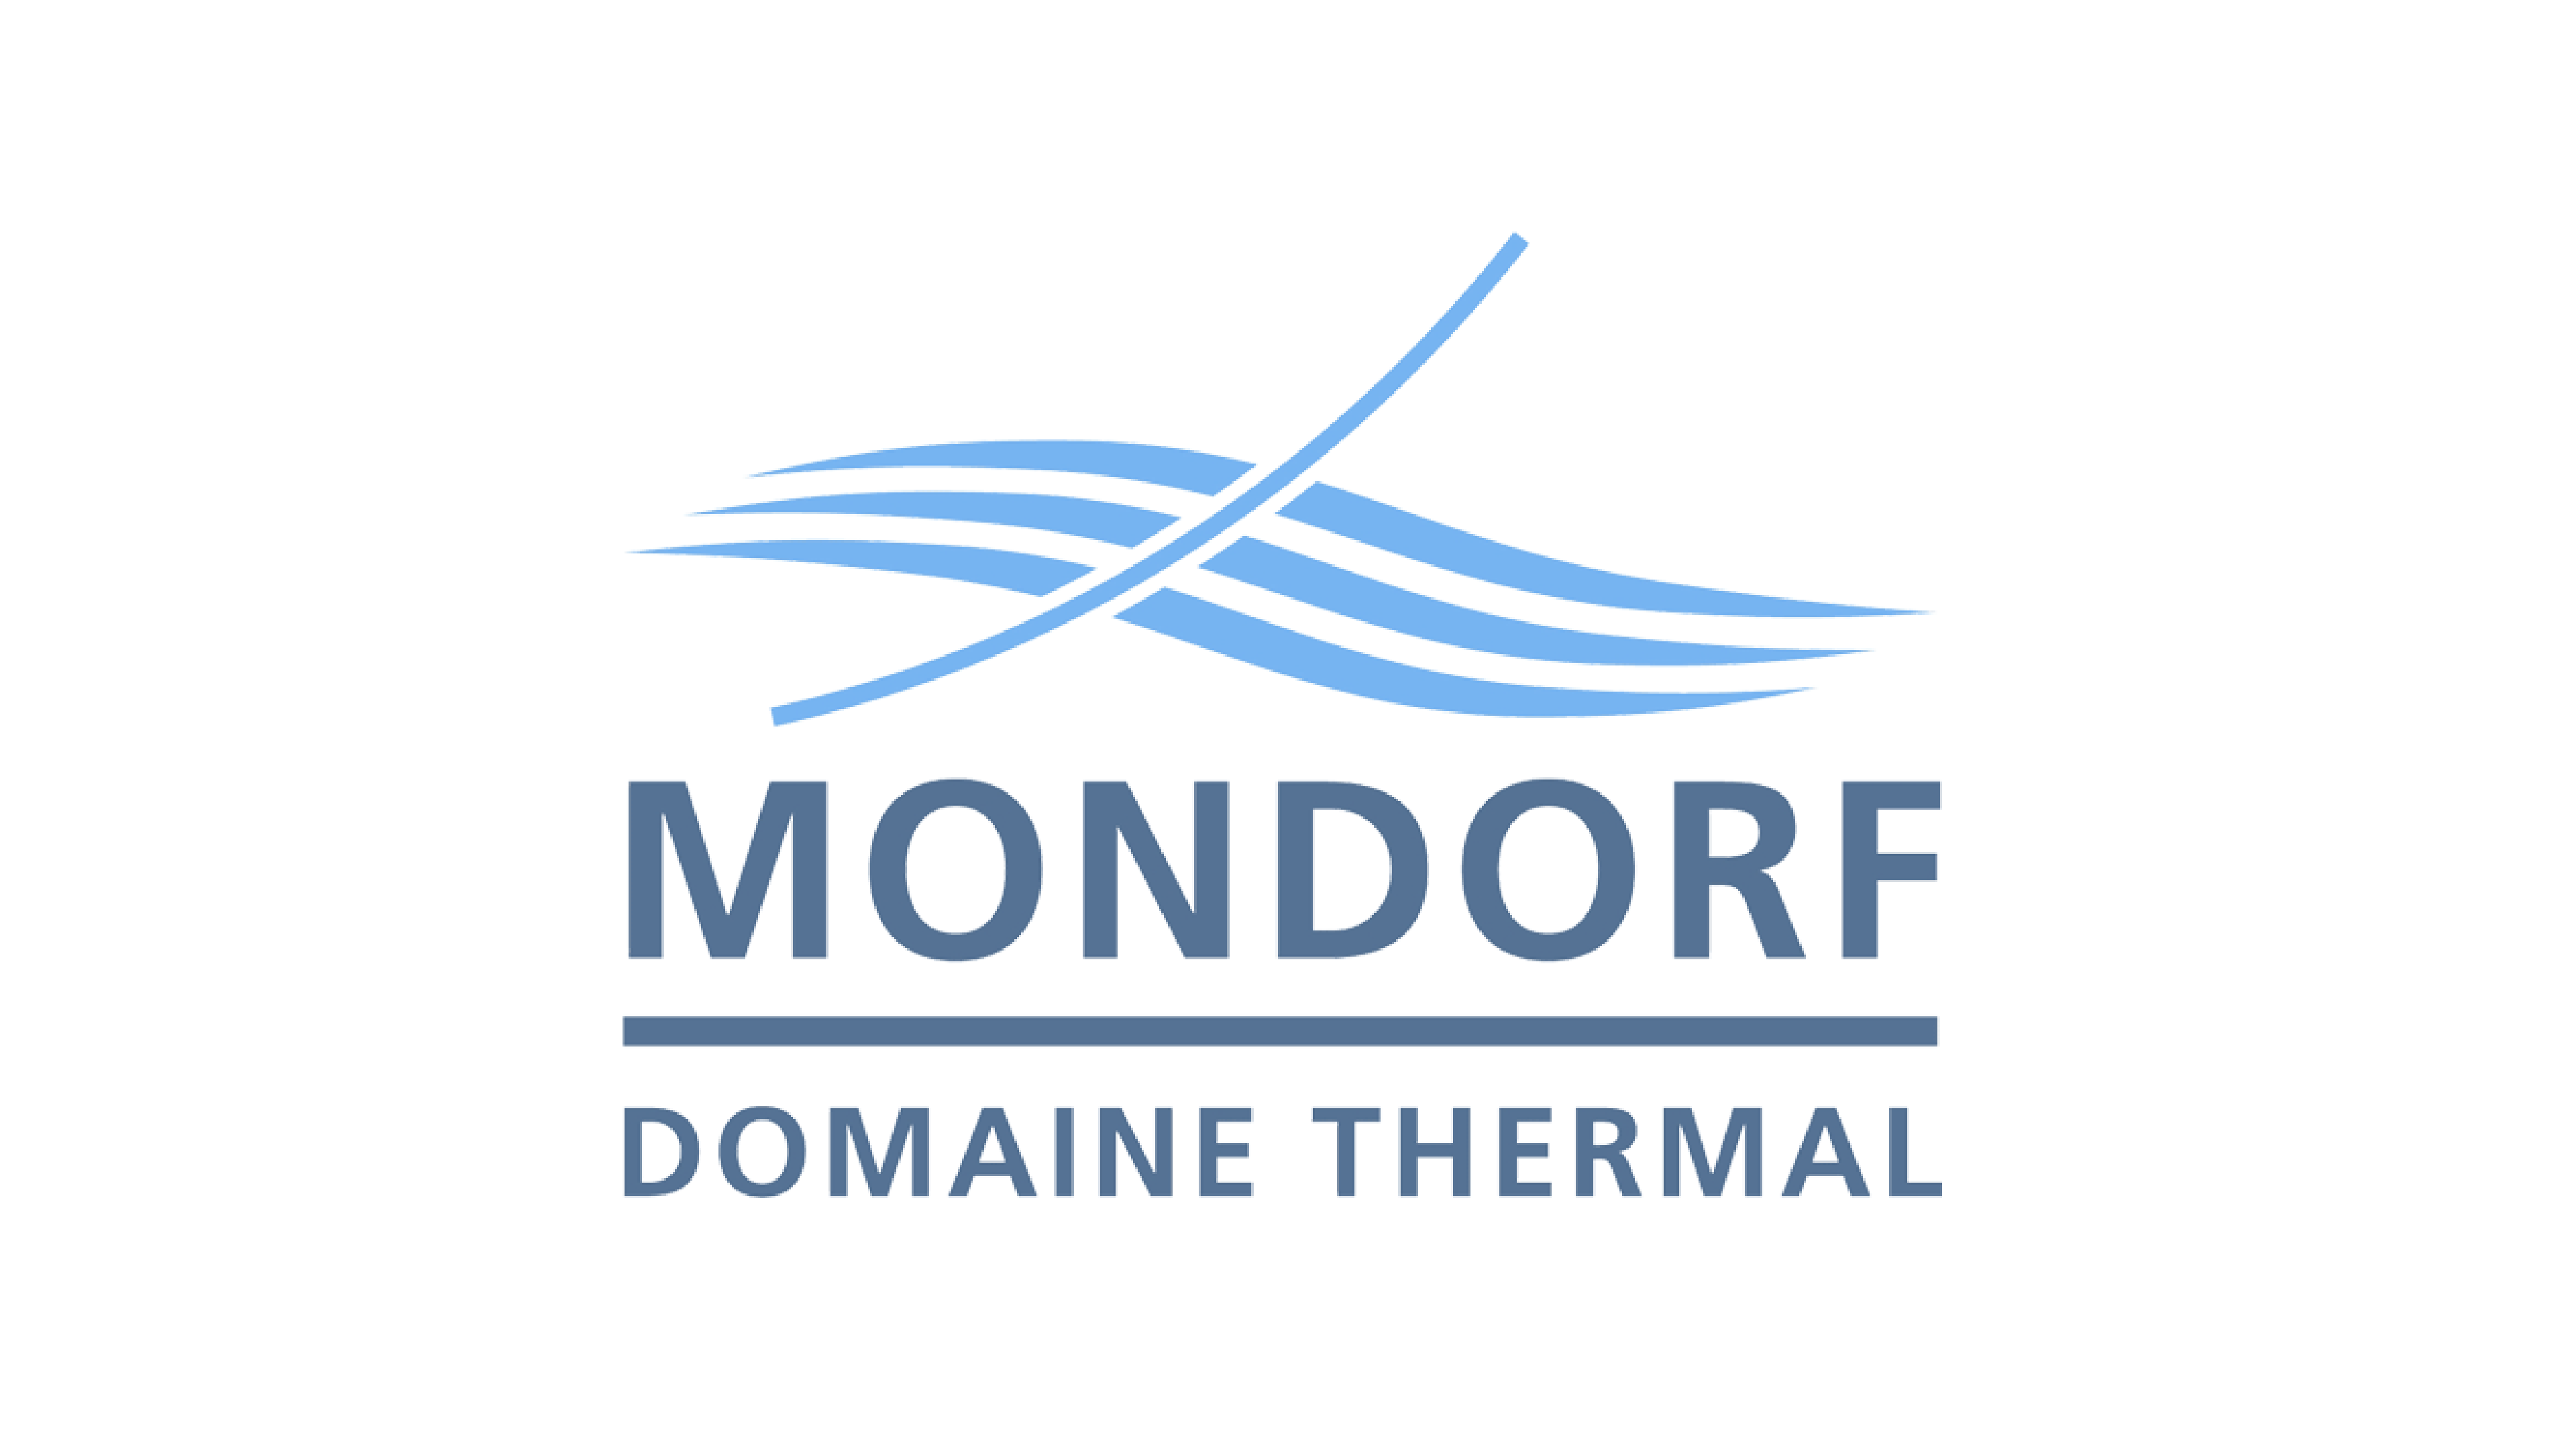 Emplois chez Domaine Thermal Mondorf via Adecco